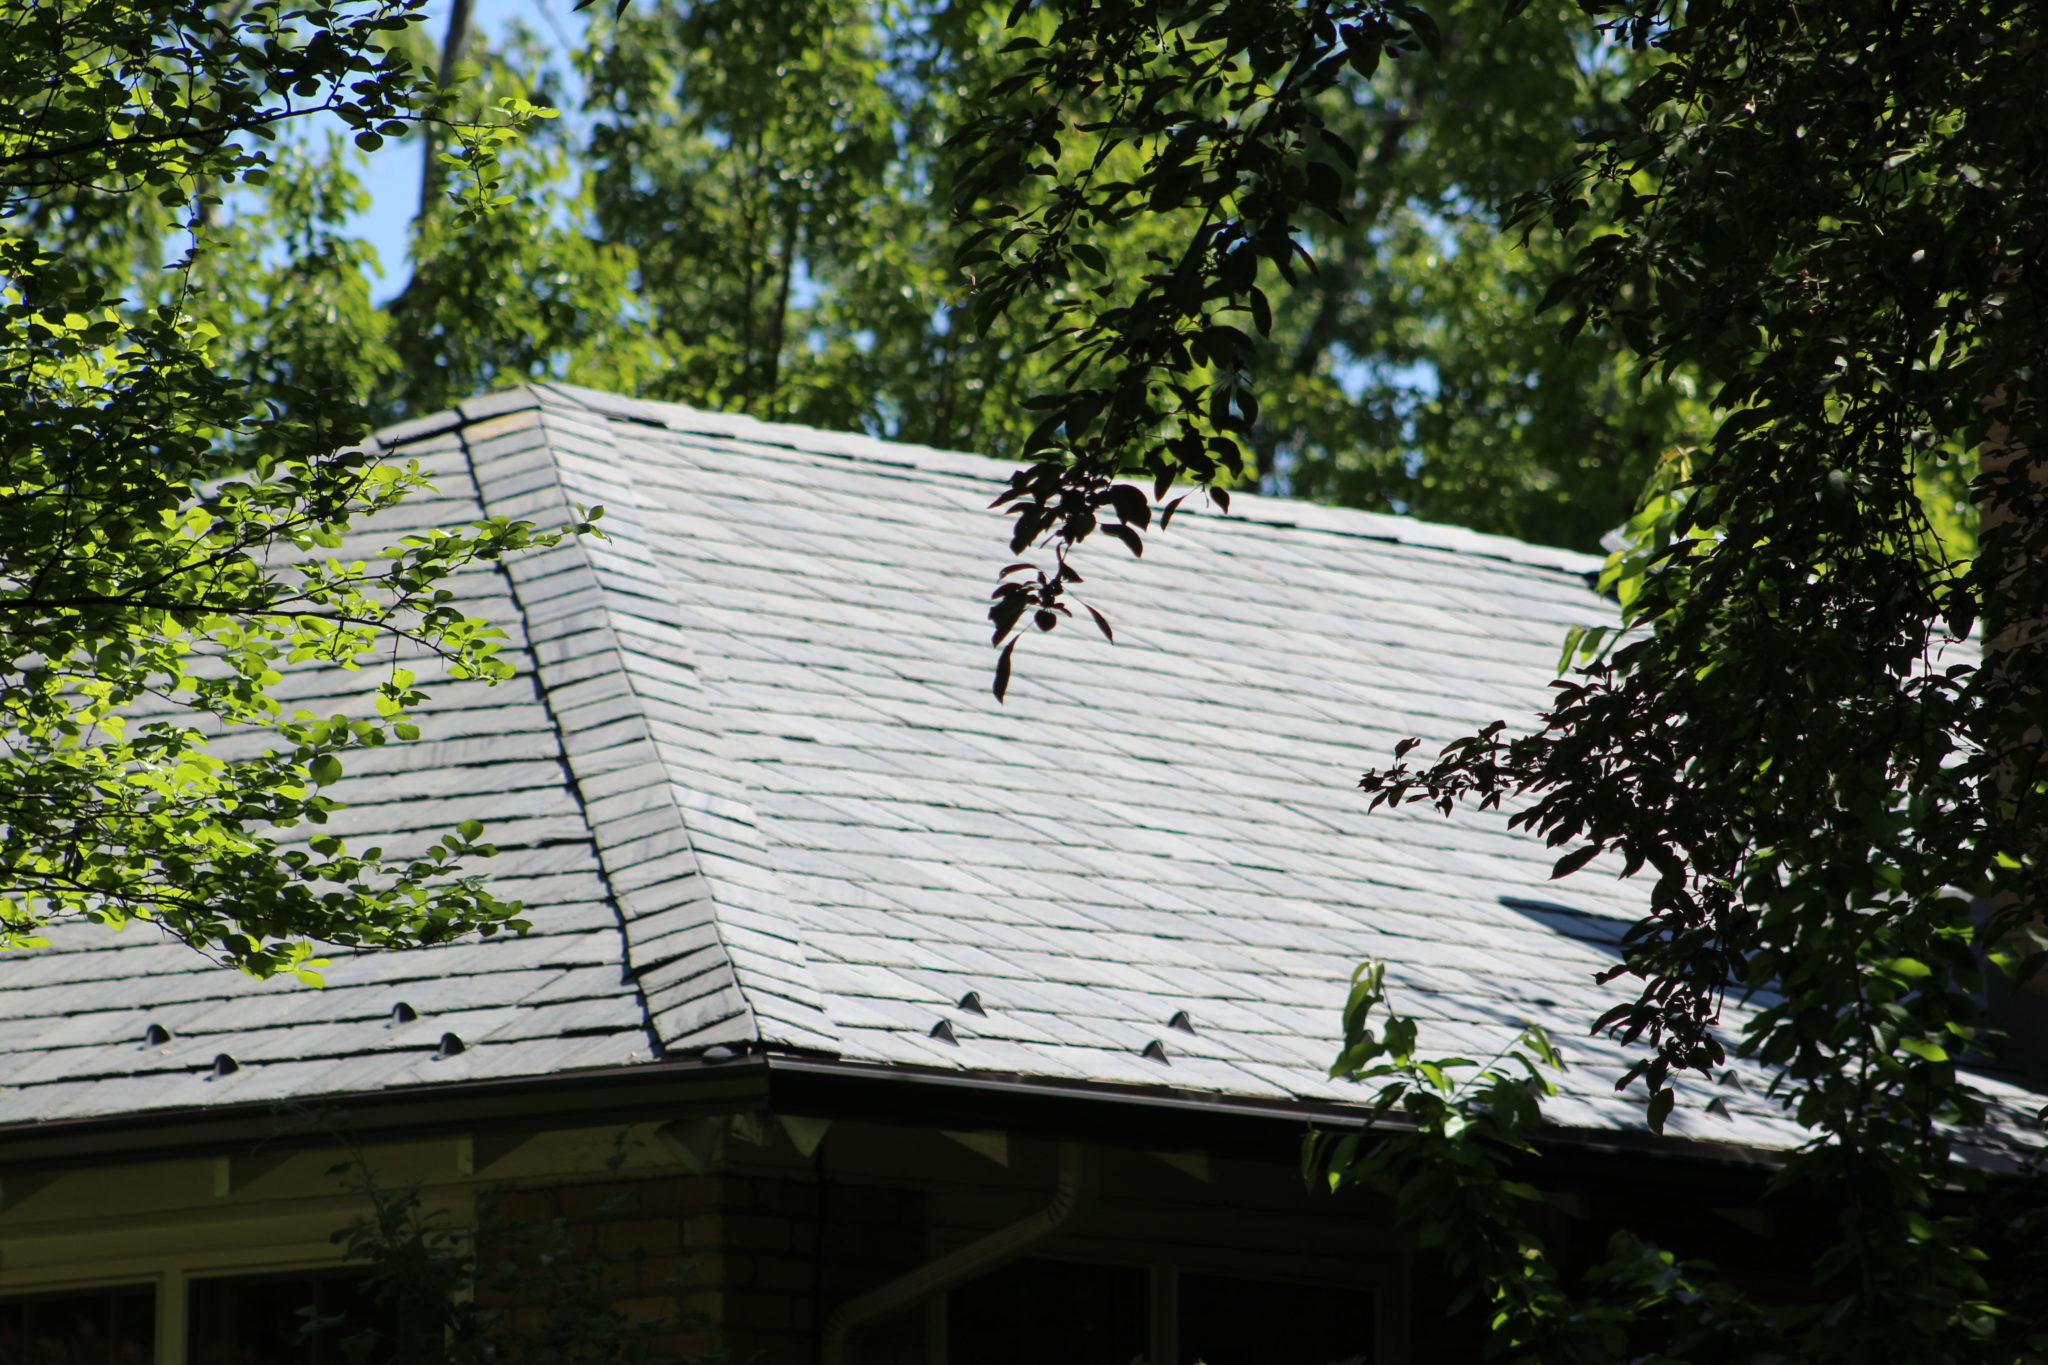 Slate Tile roof close up